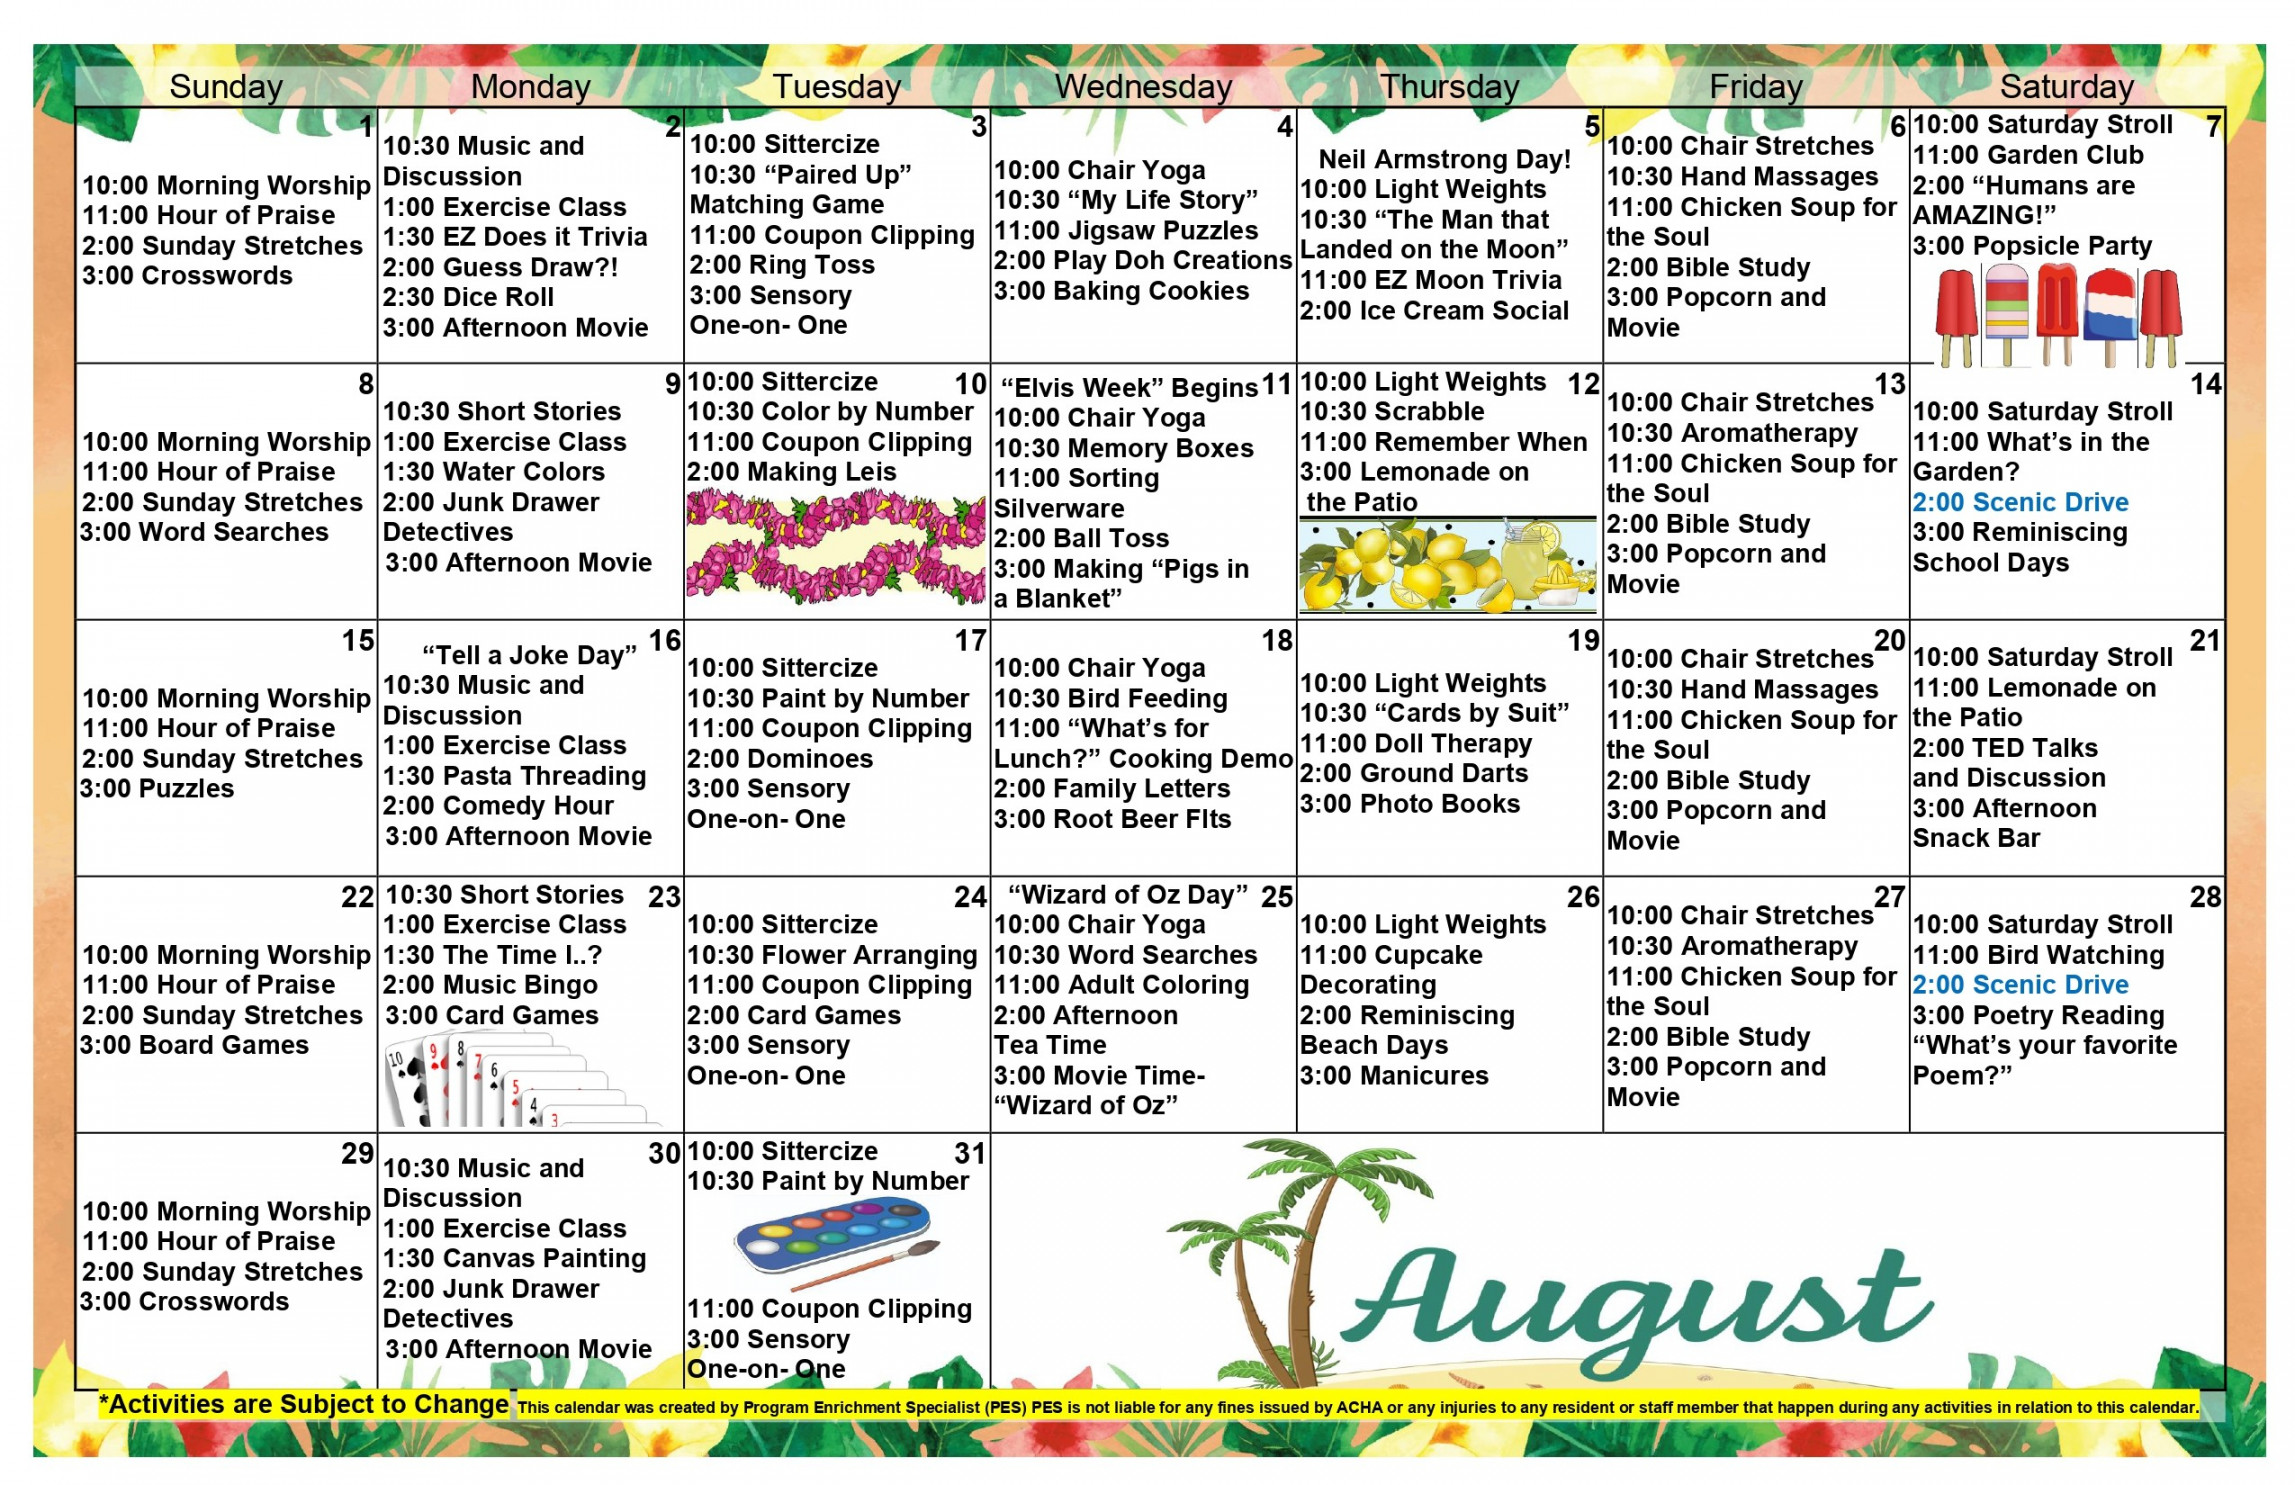 Alf Boss Resident Activity Calendar Subscriptions - ALF Boss